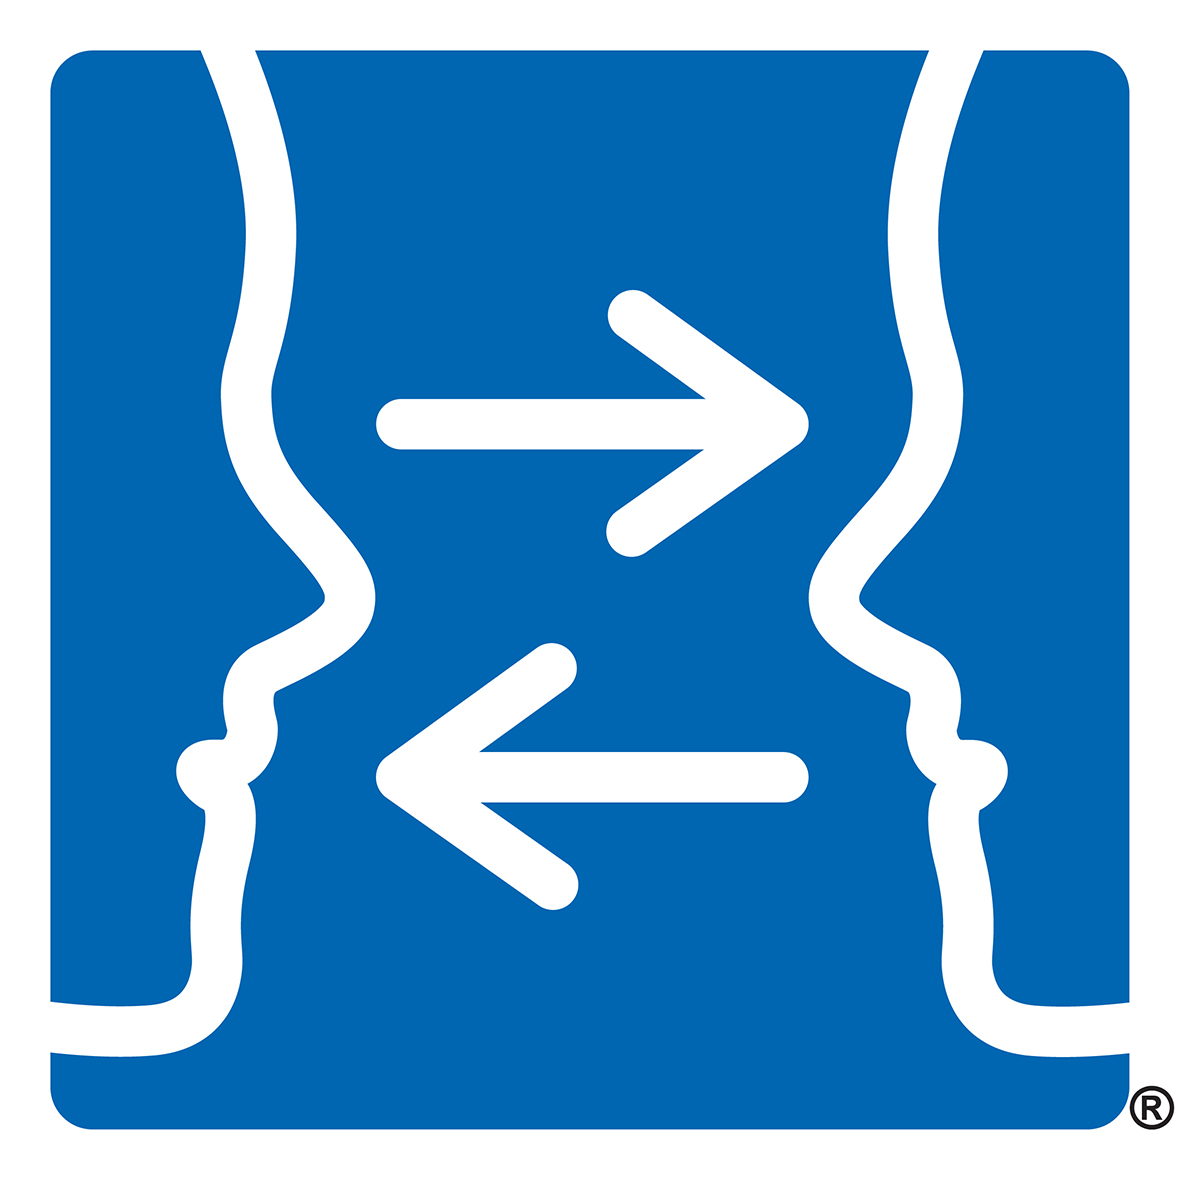 The Communication Access Symbol